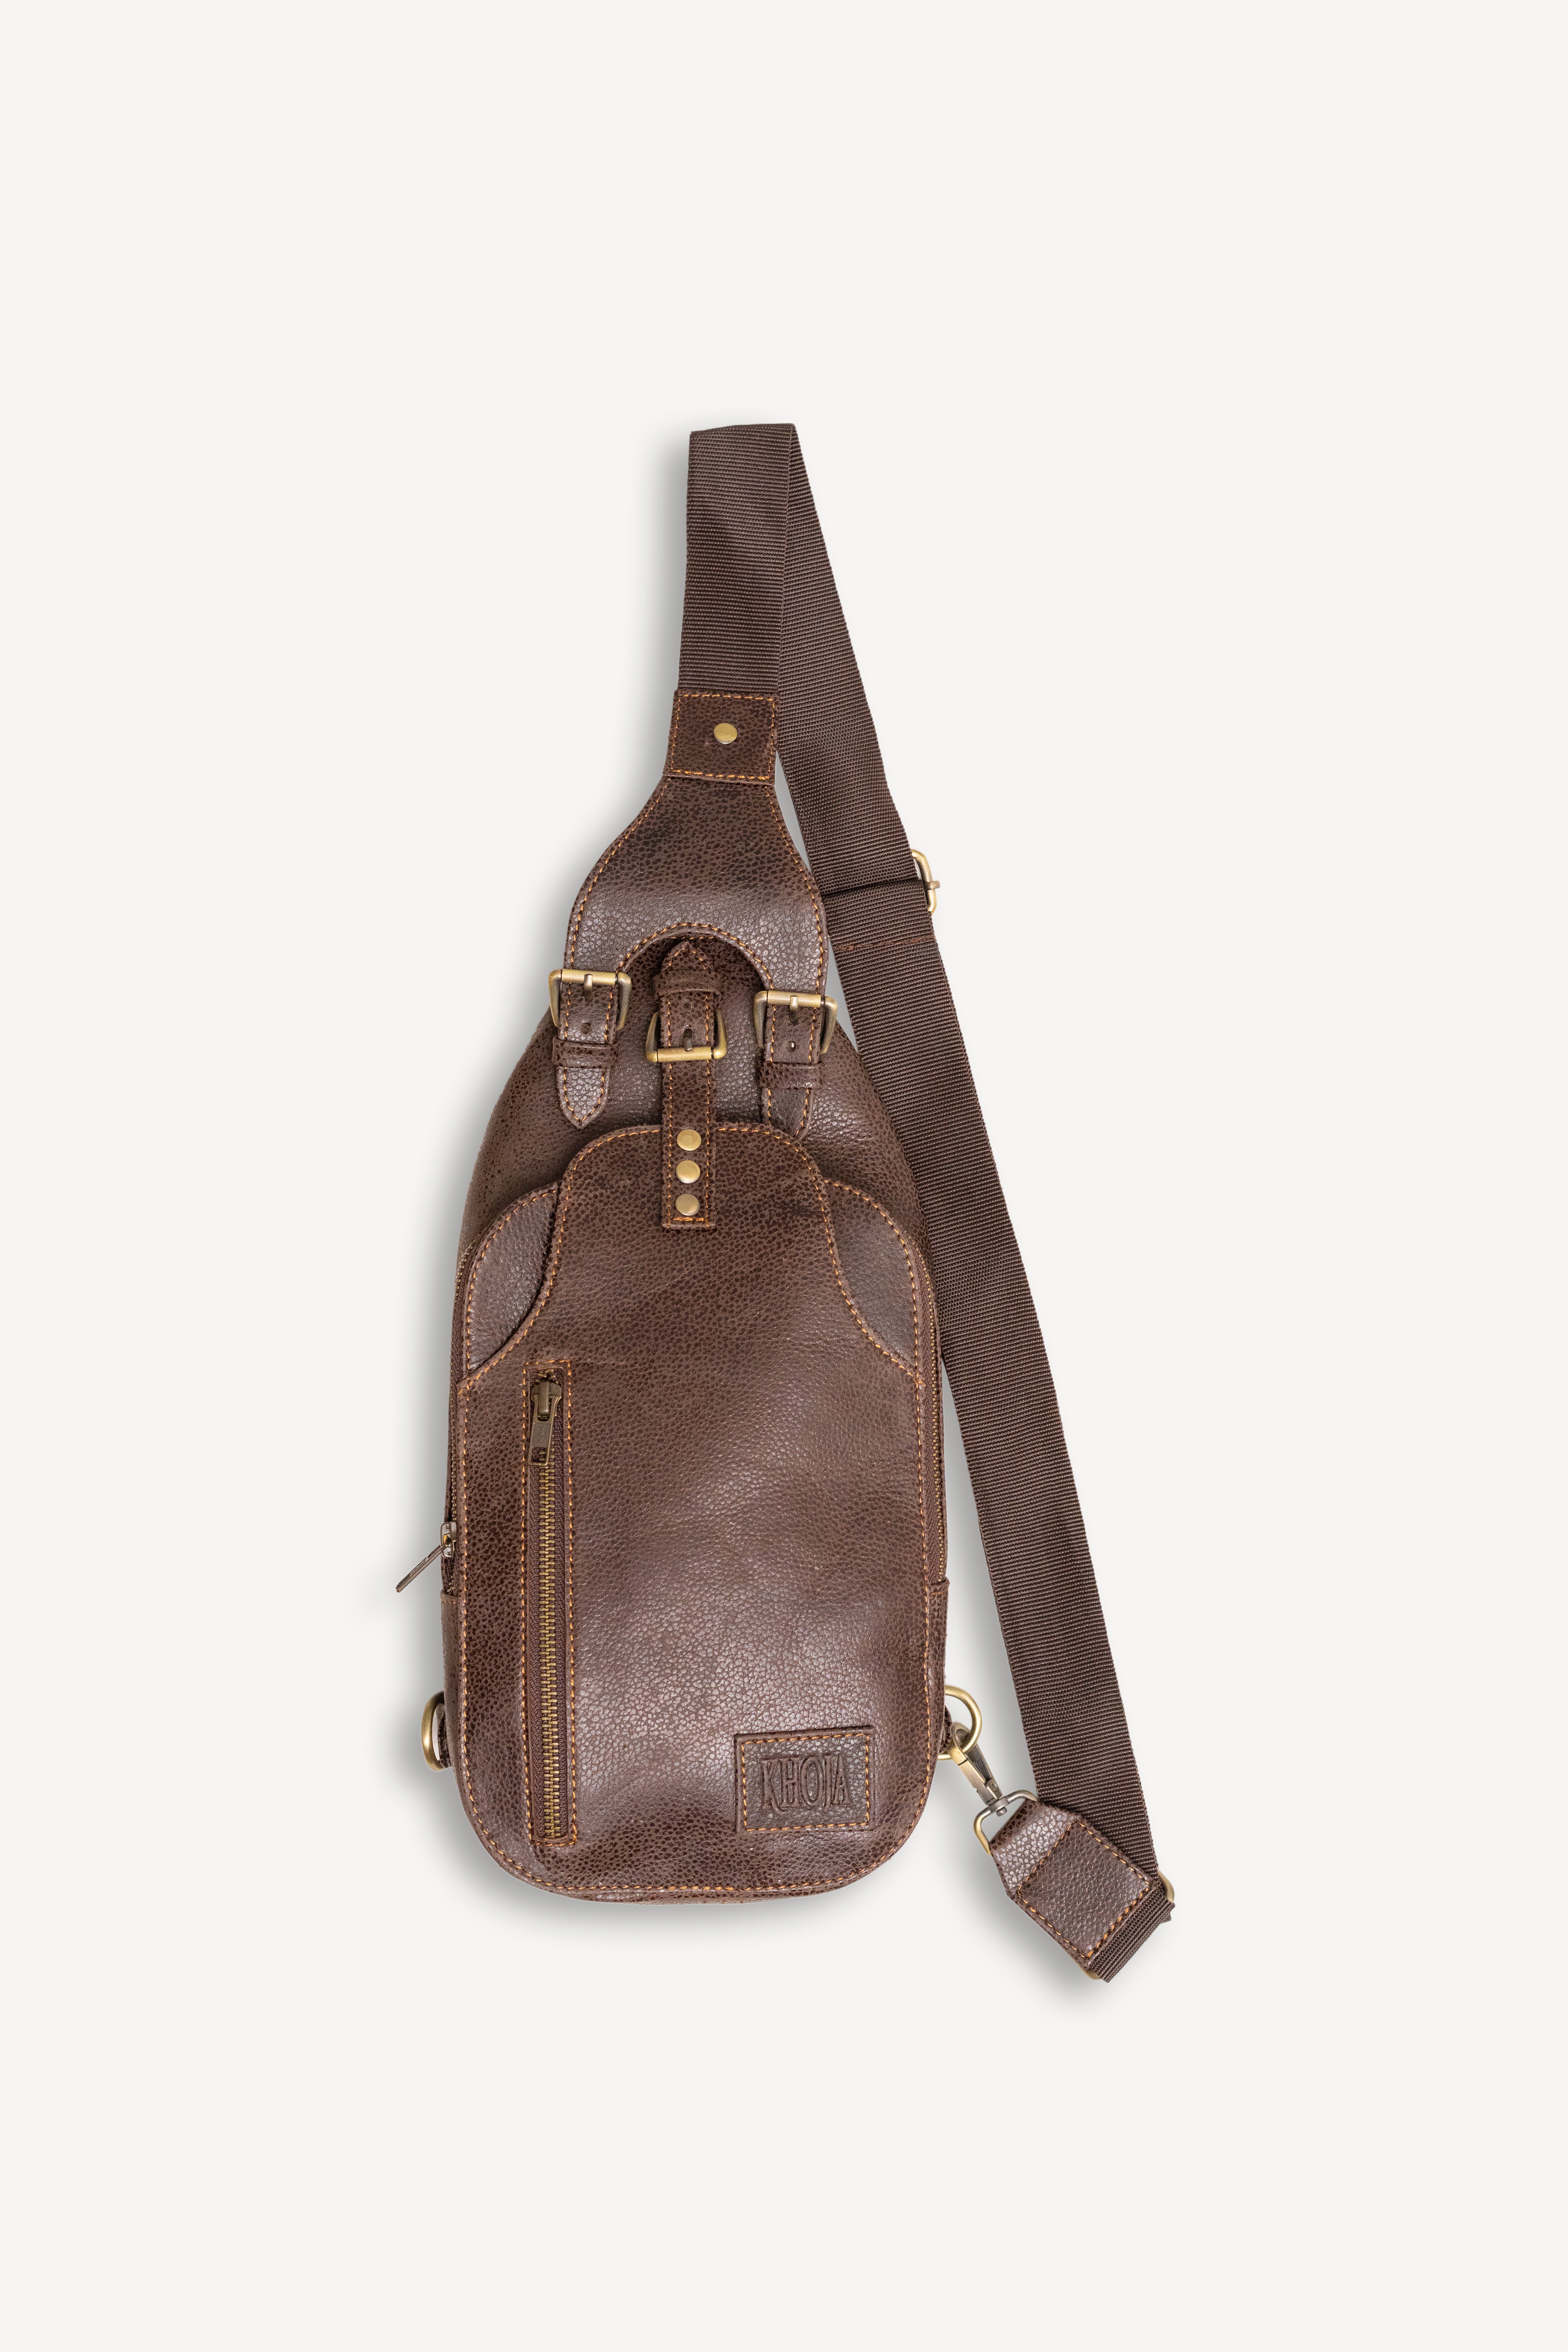 “The Vintage Satchel” Cross Bag